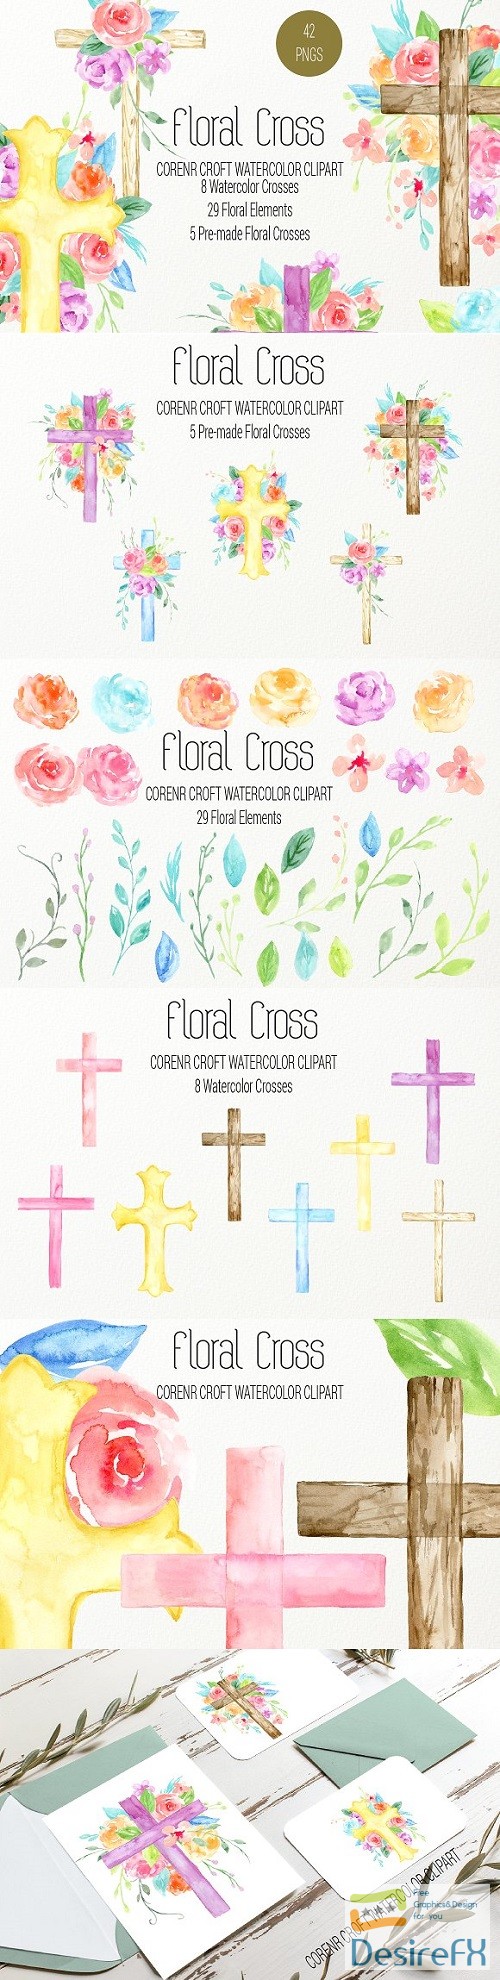 Watercolor clip Art Floral Cross - 2362534